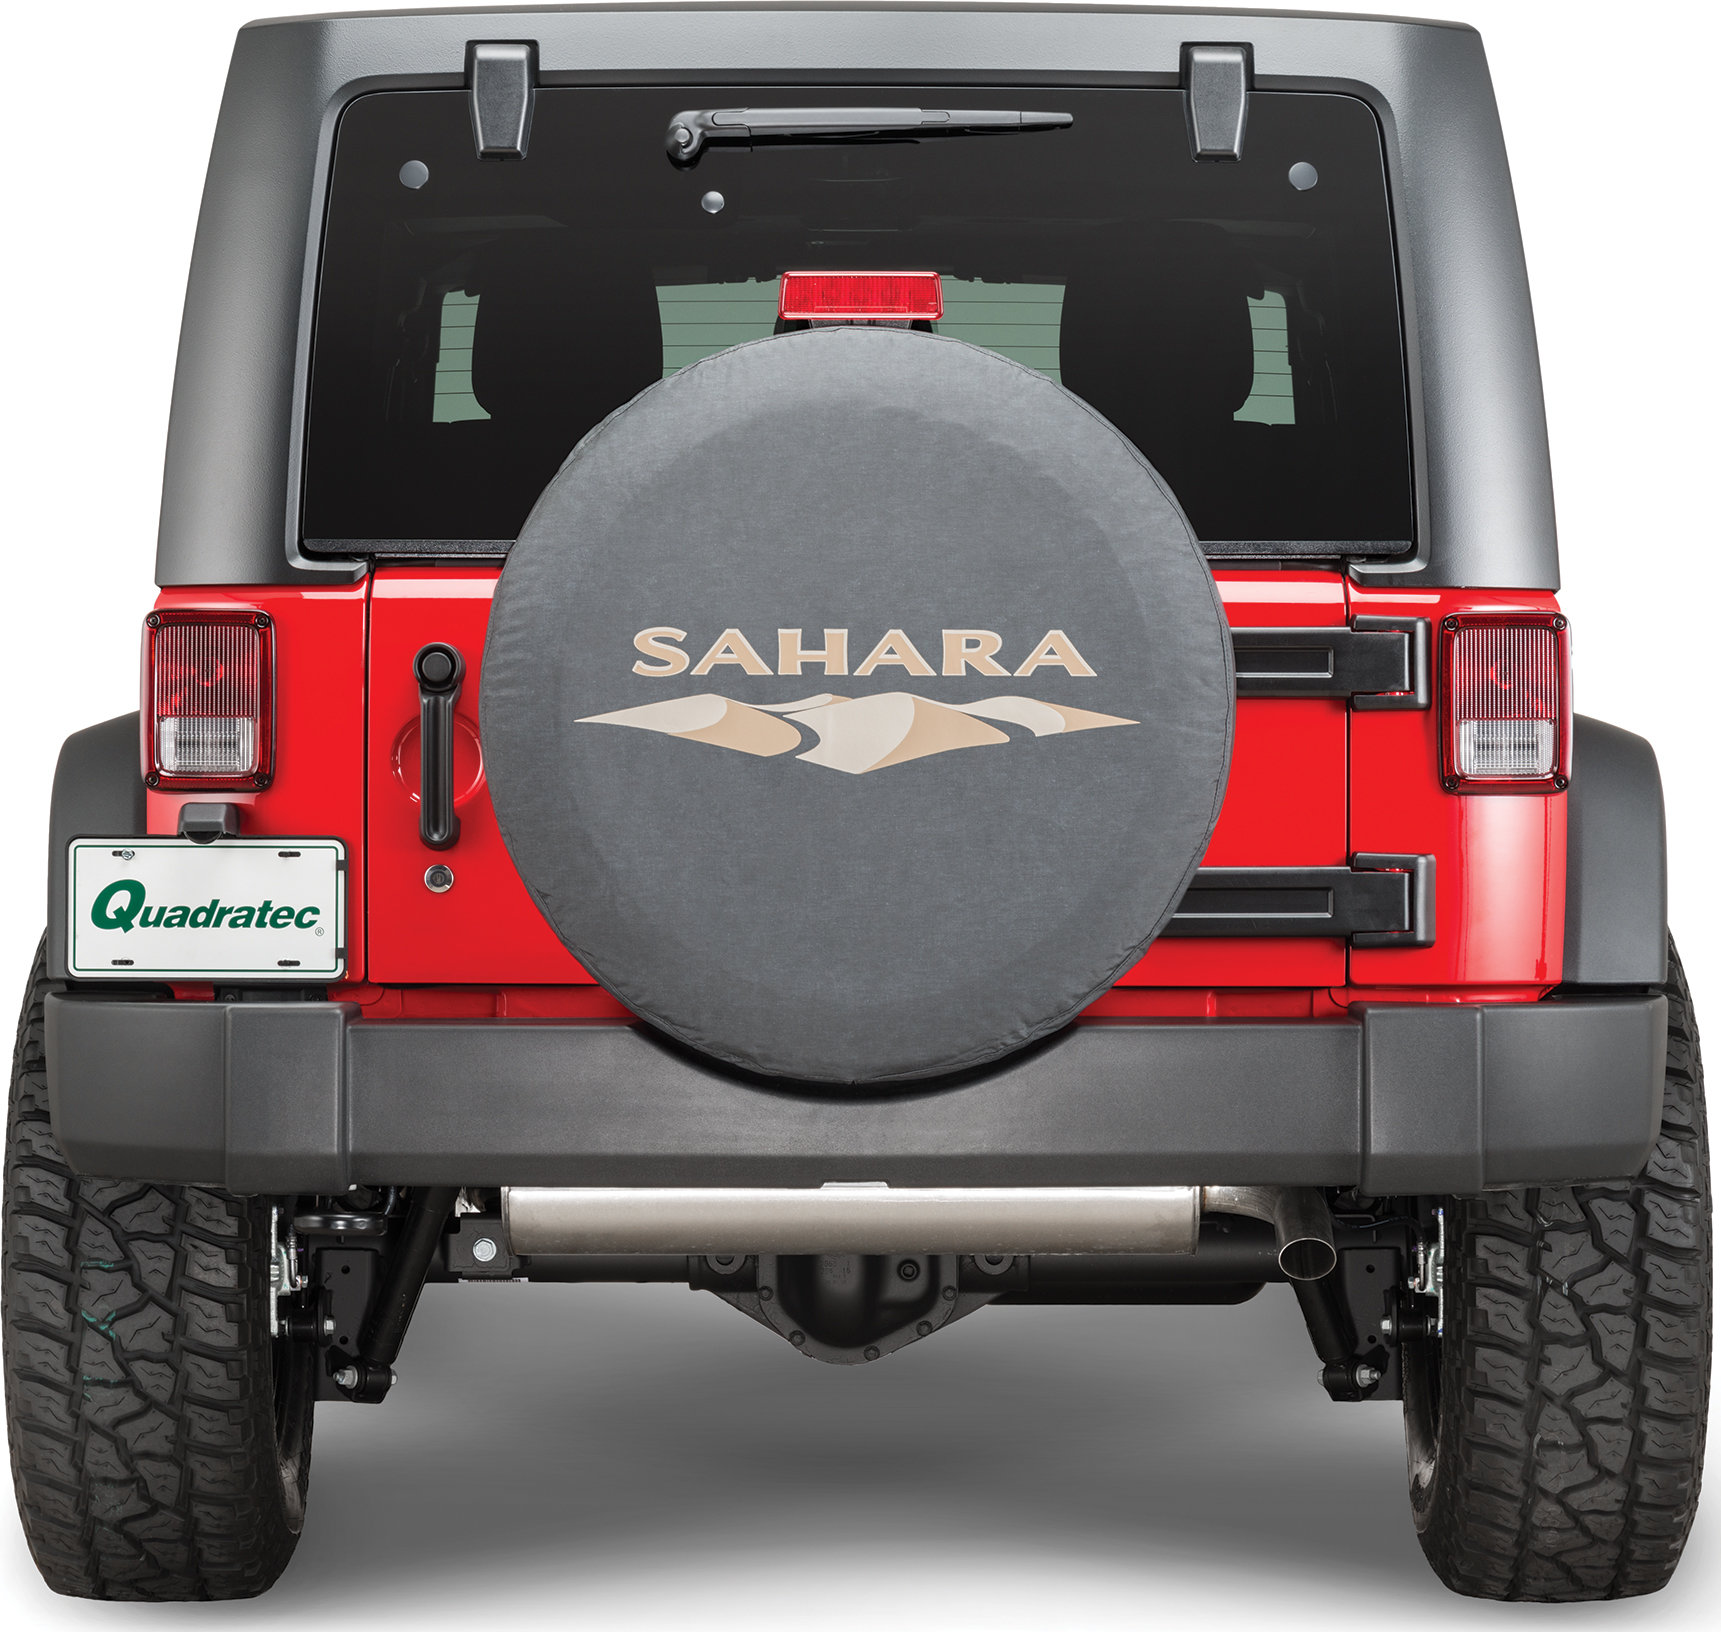 Arriba 76+ imagen 2008 jeep wrangler tire size p255 70r18 sahara unlimited sahara